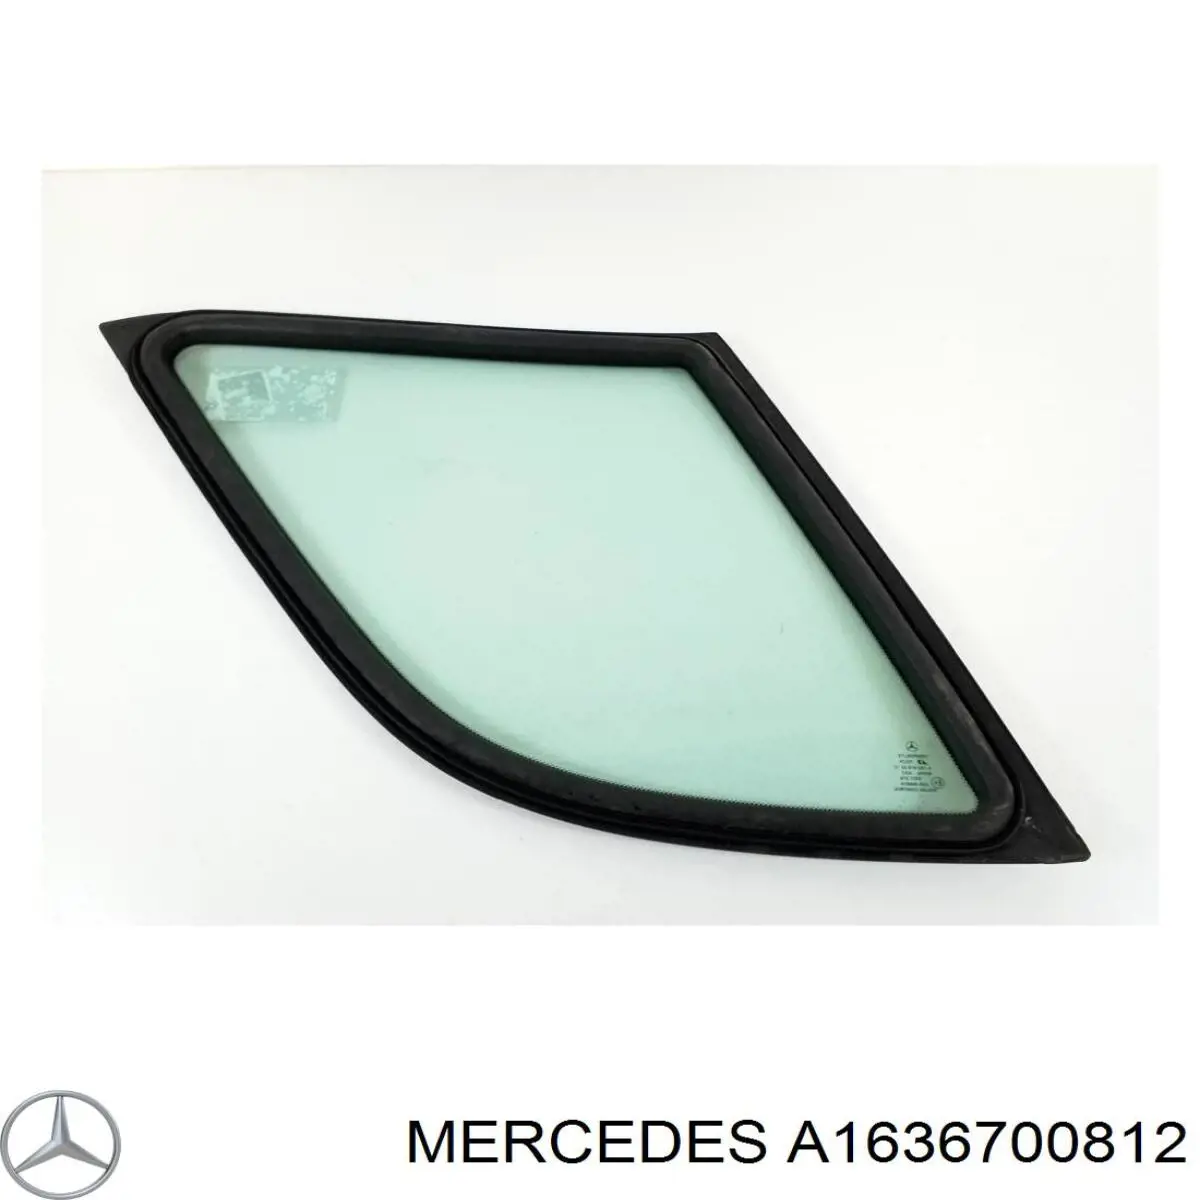 A1636700812 Mercedes ventanilla costado superior derecha (lado maletero)